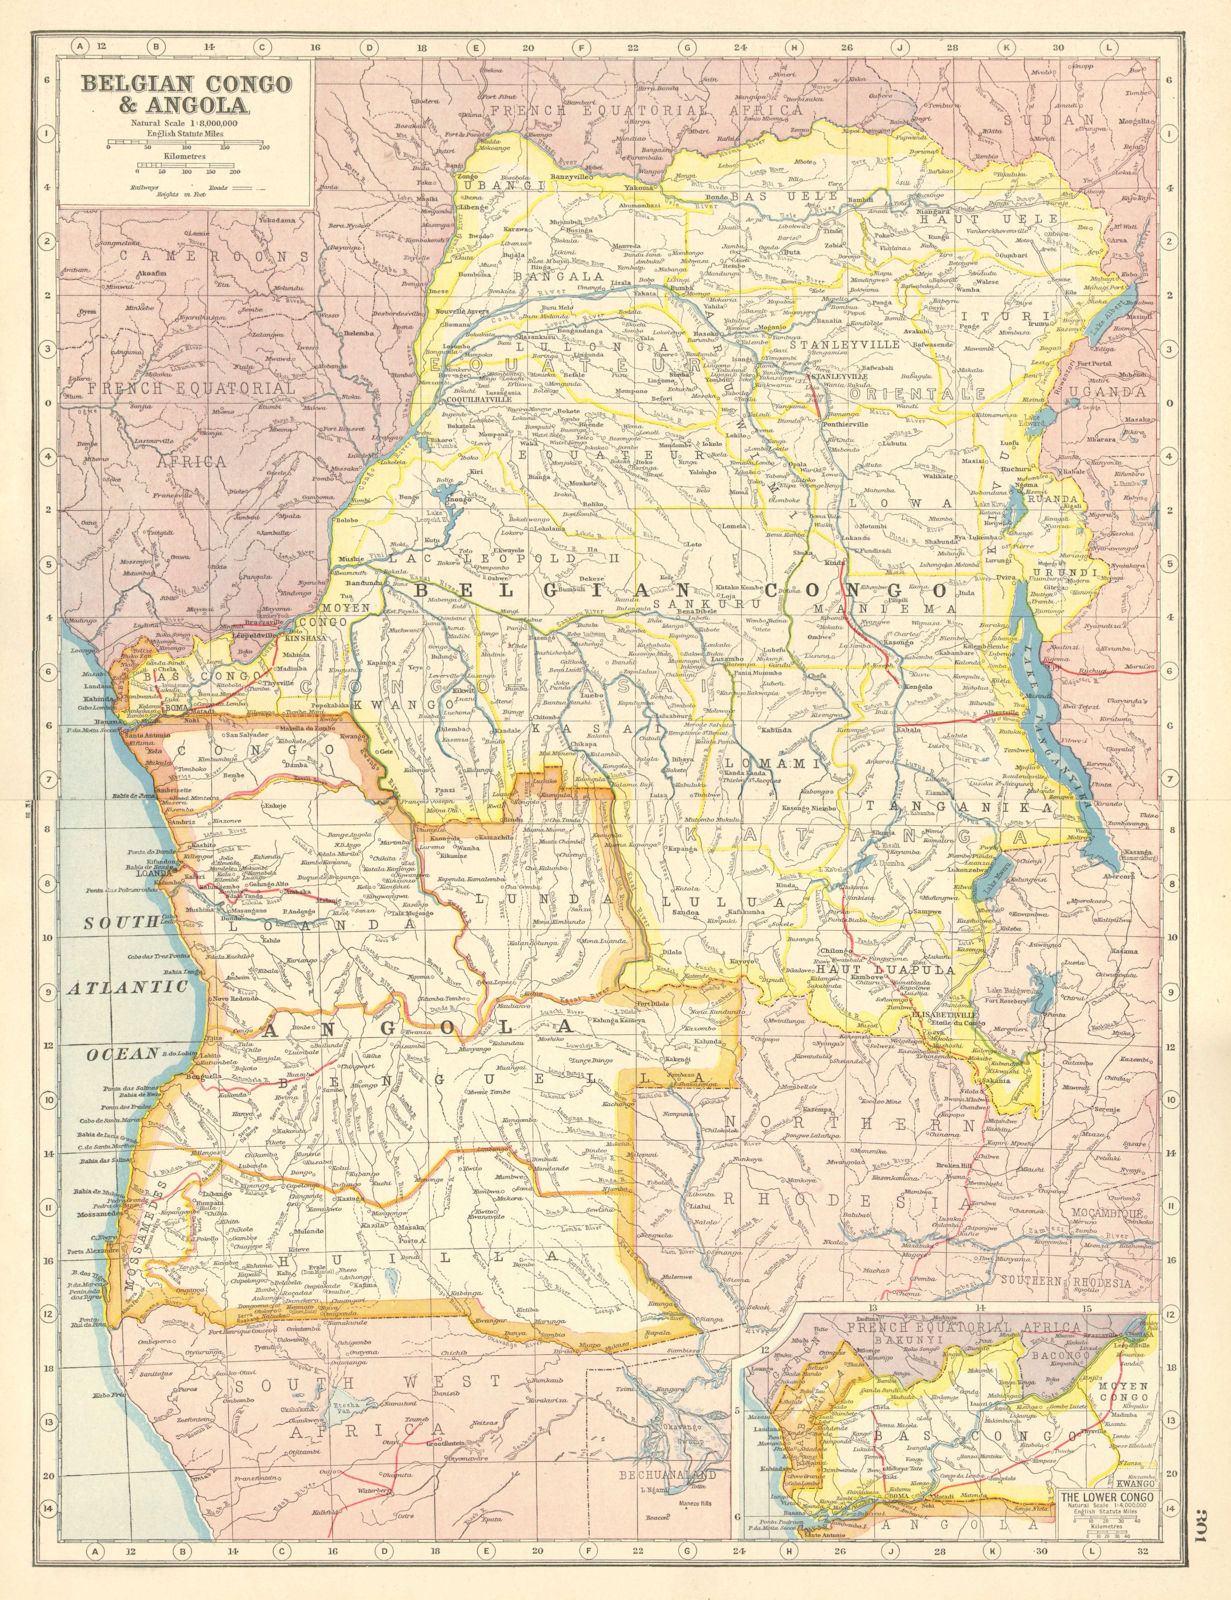 BELGIAN CONGO/ANGOLA. South West Africa Railways Provinces. HARMSWORTH 1920 map